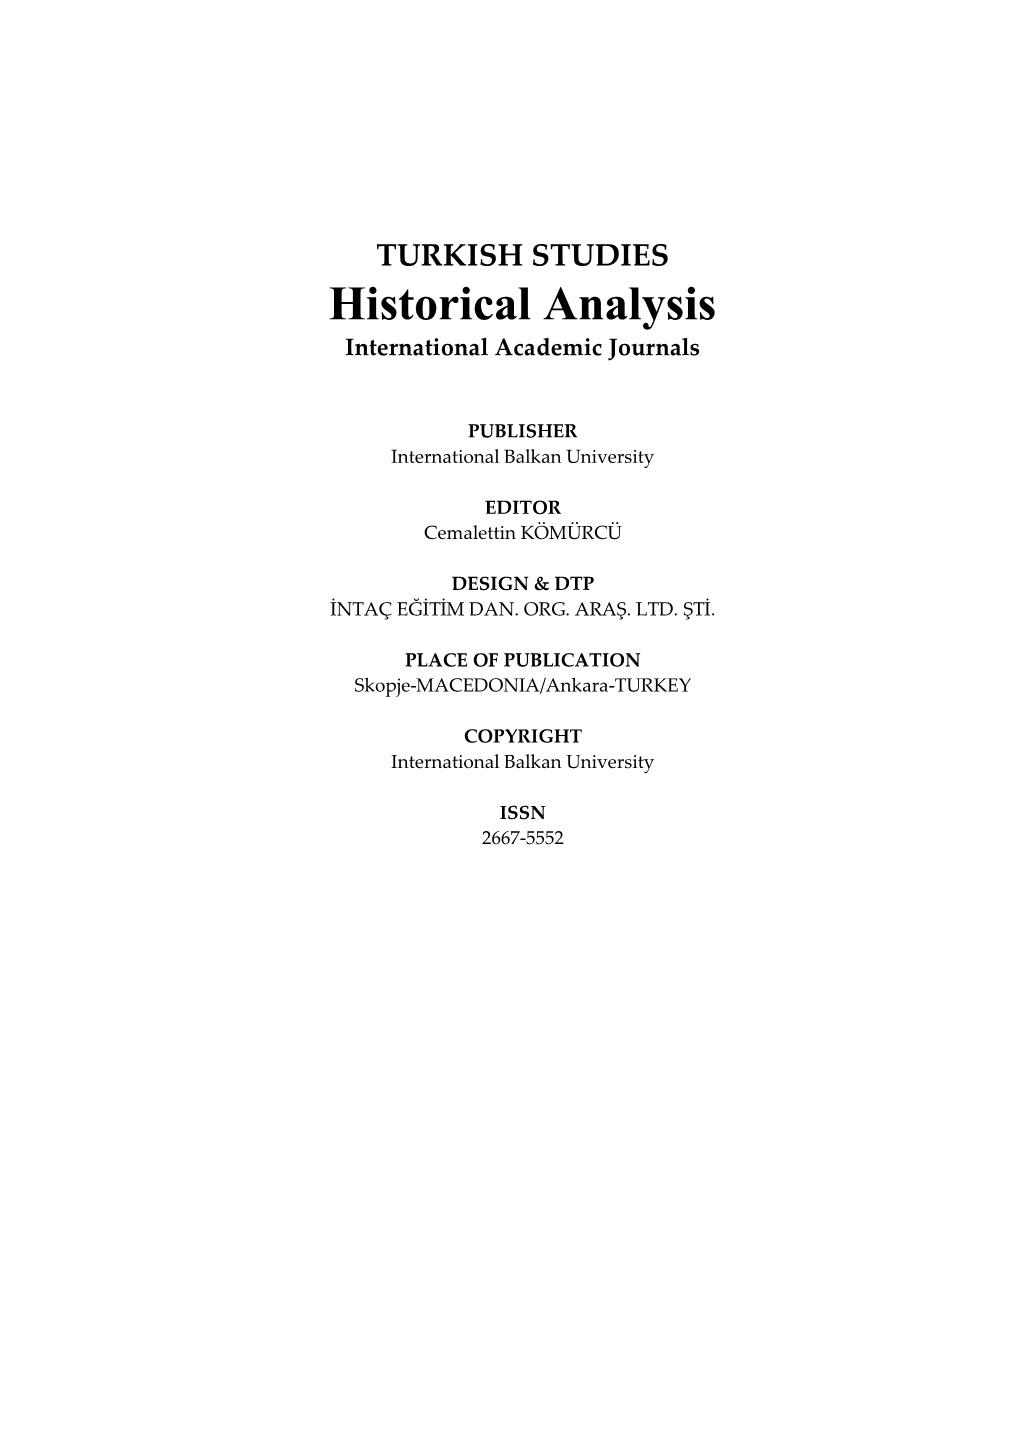 Historical Analysis International Academic Journals